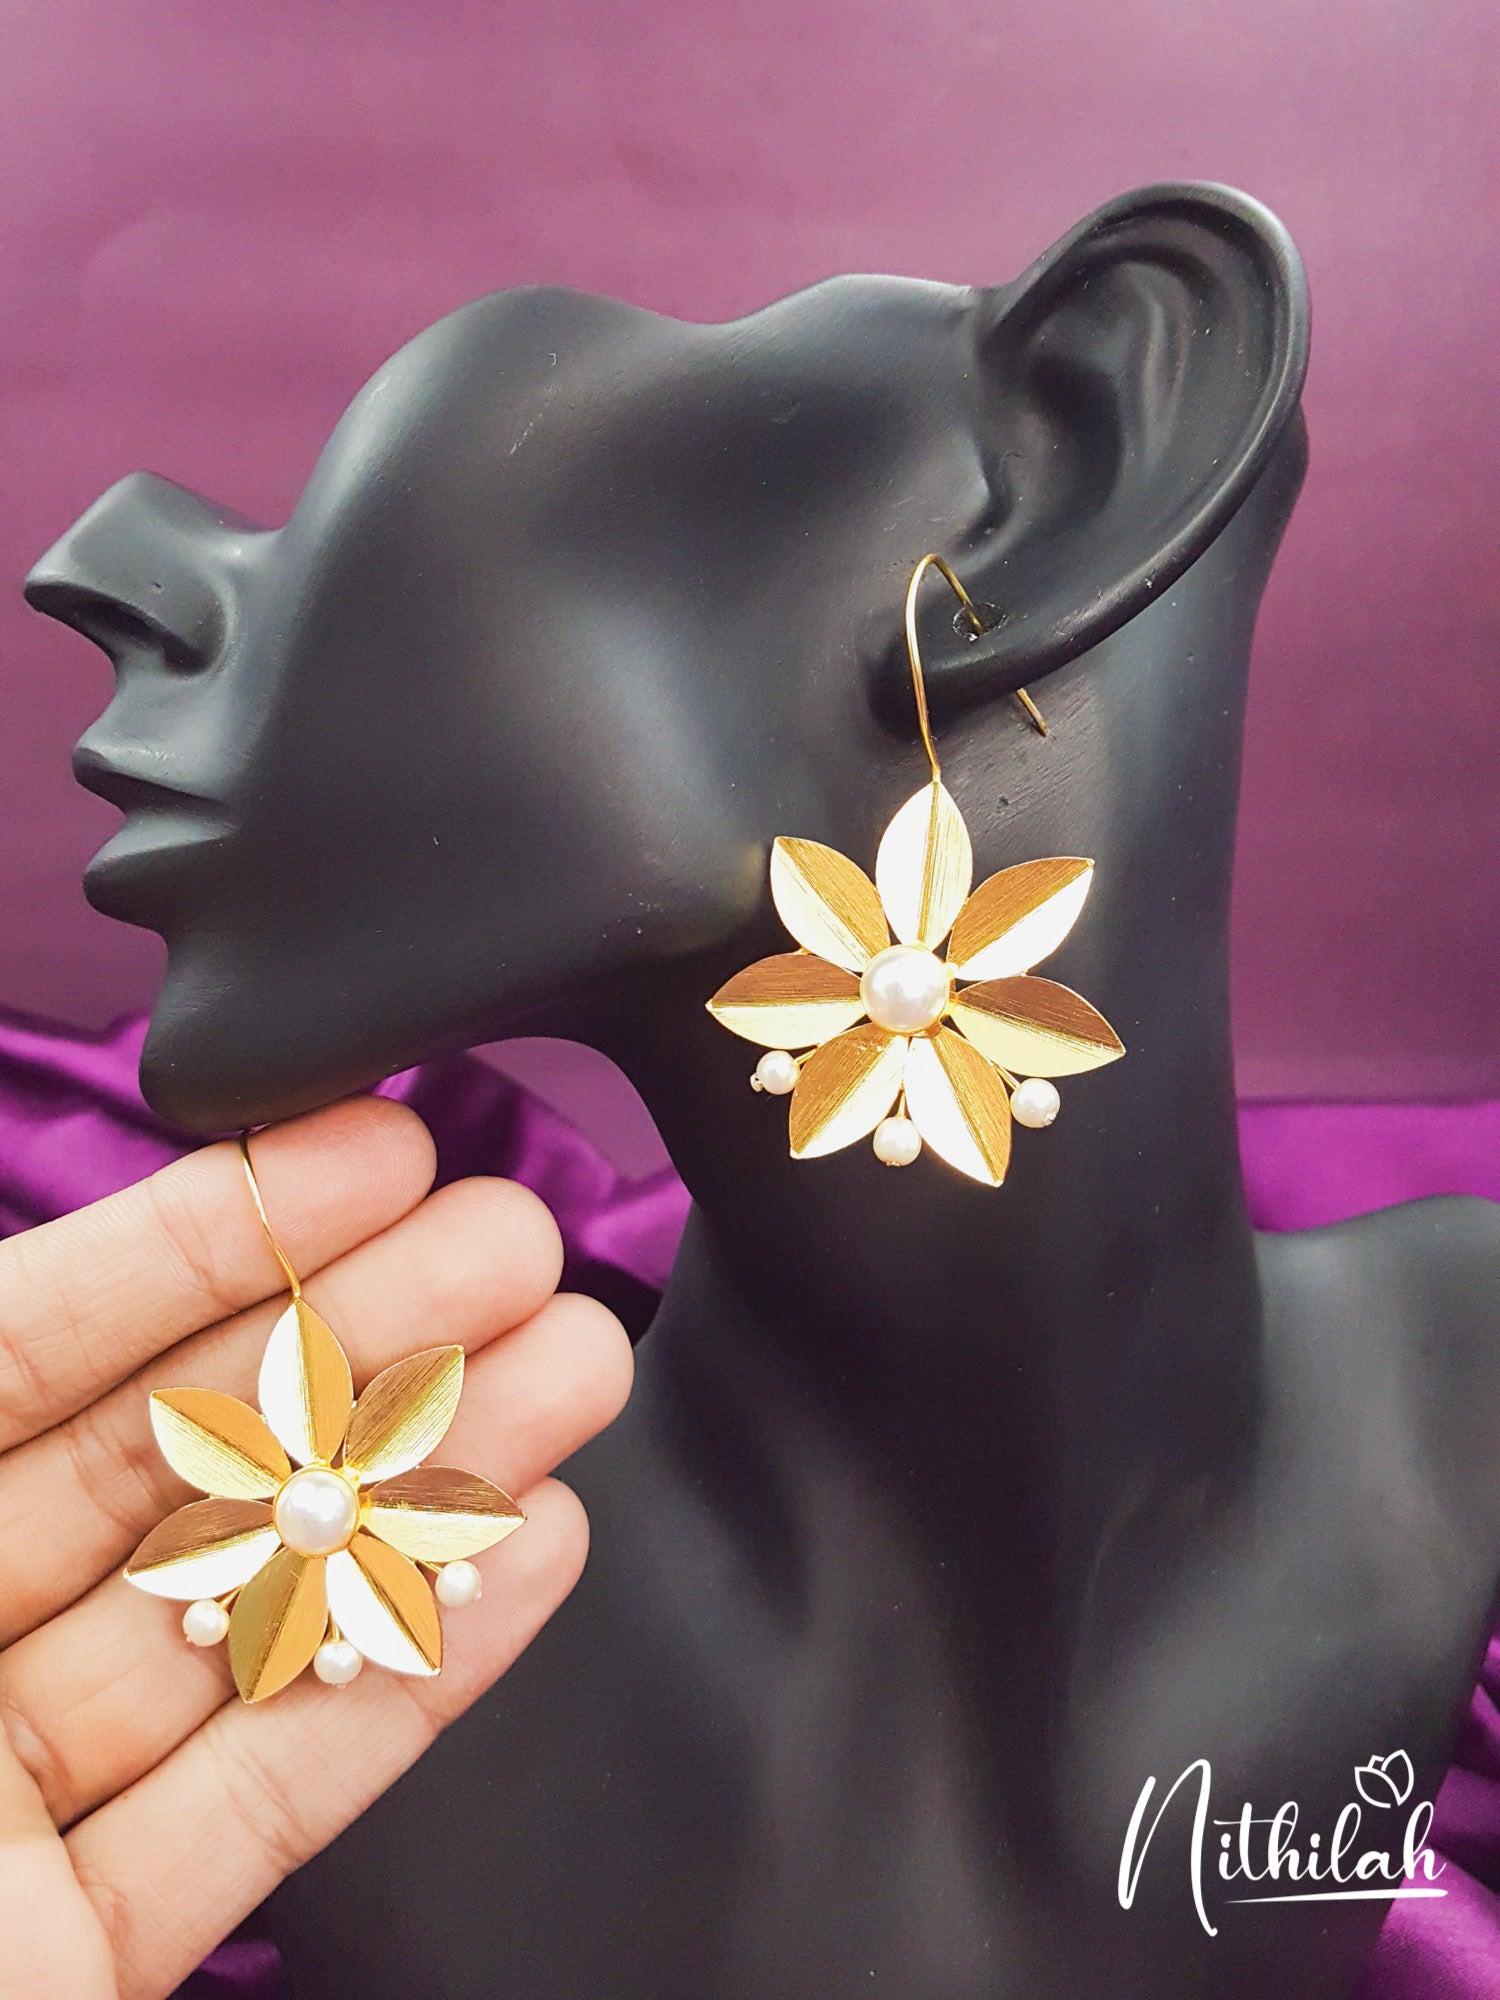 7 Petal Flower Design Earrings